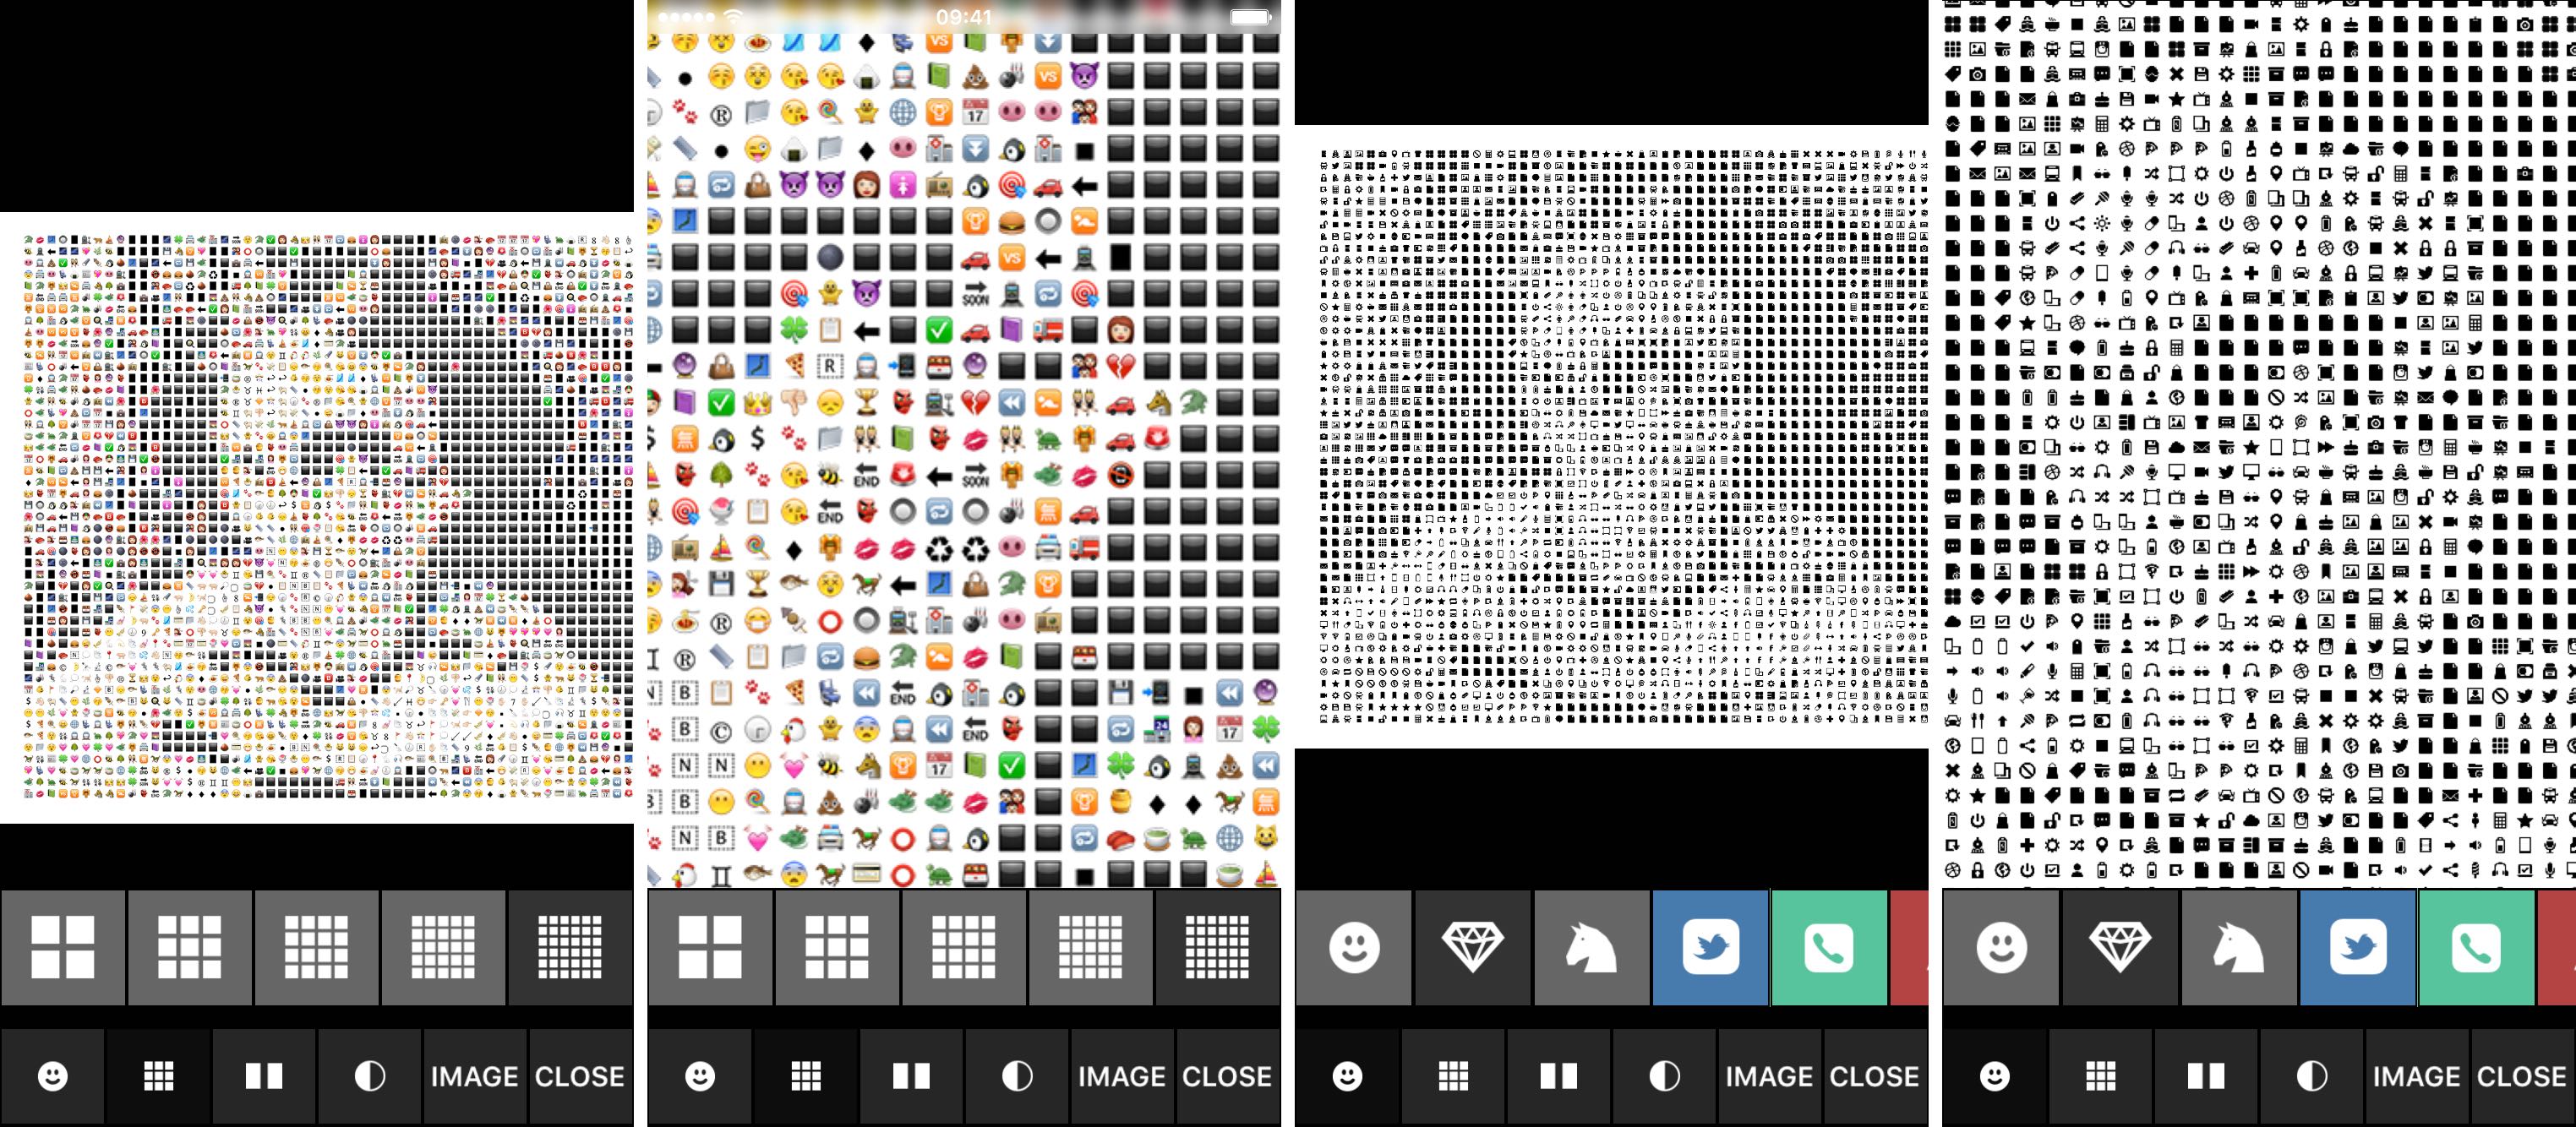 Emojify 1.5 for iOS iPhone screenshot 002